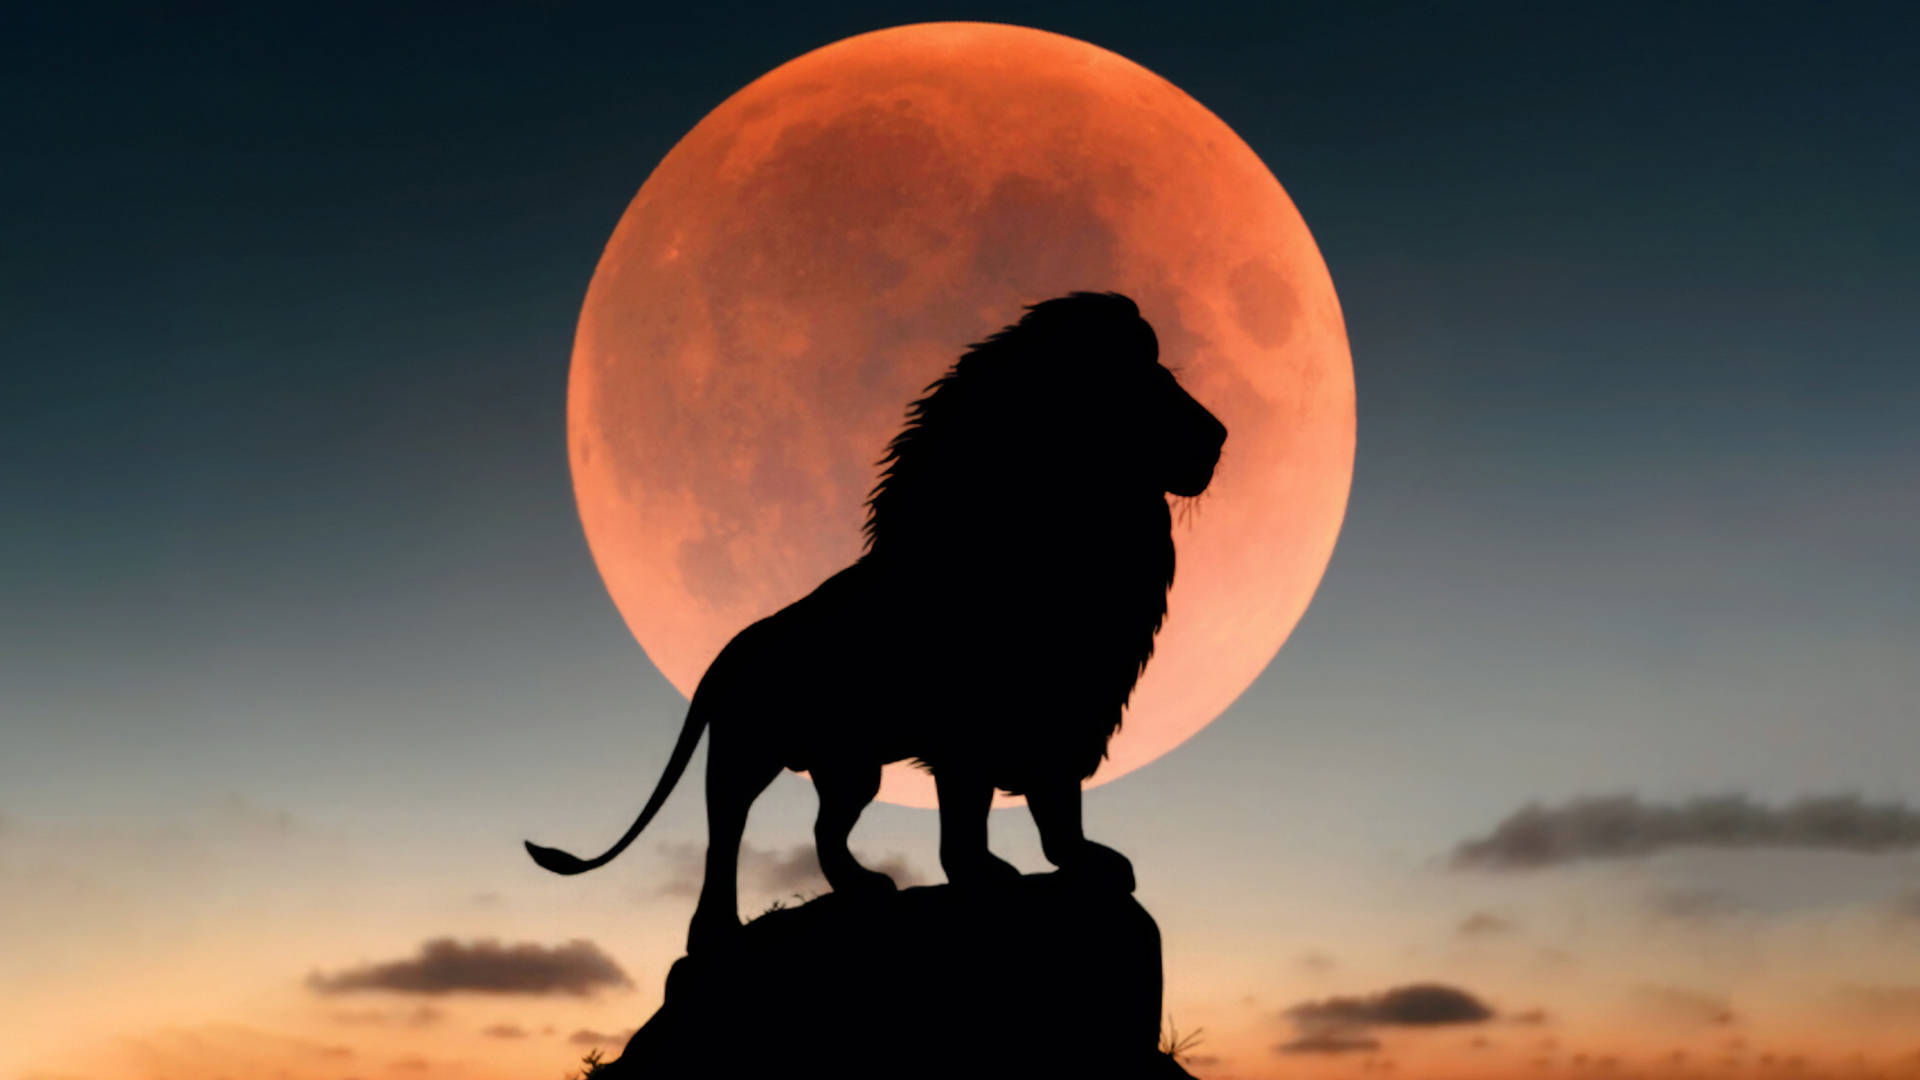 4k Ultra Hd Lions Red Full Moon